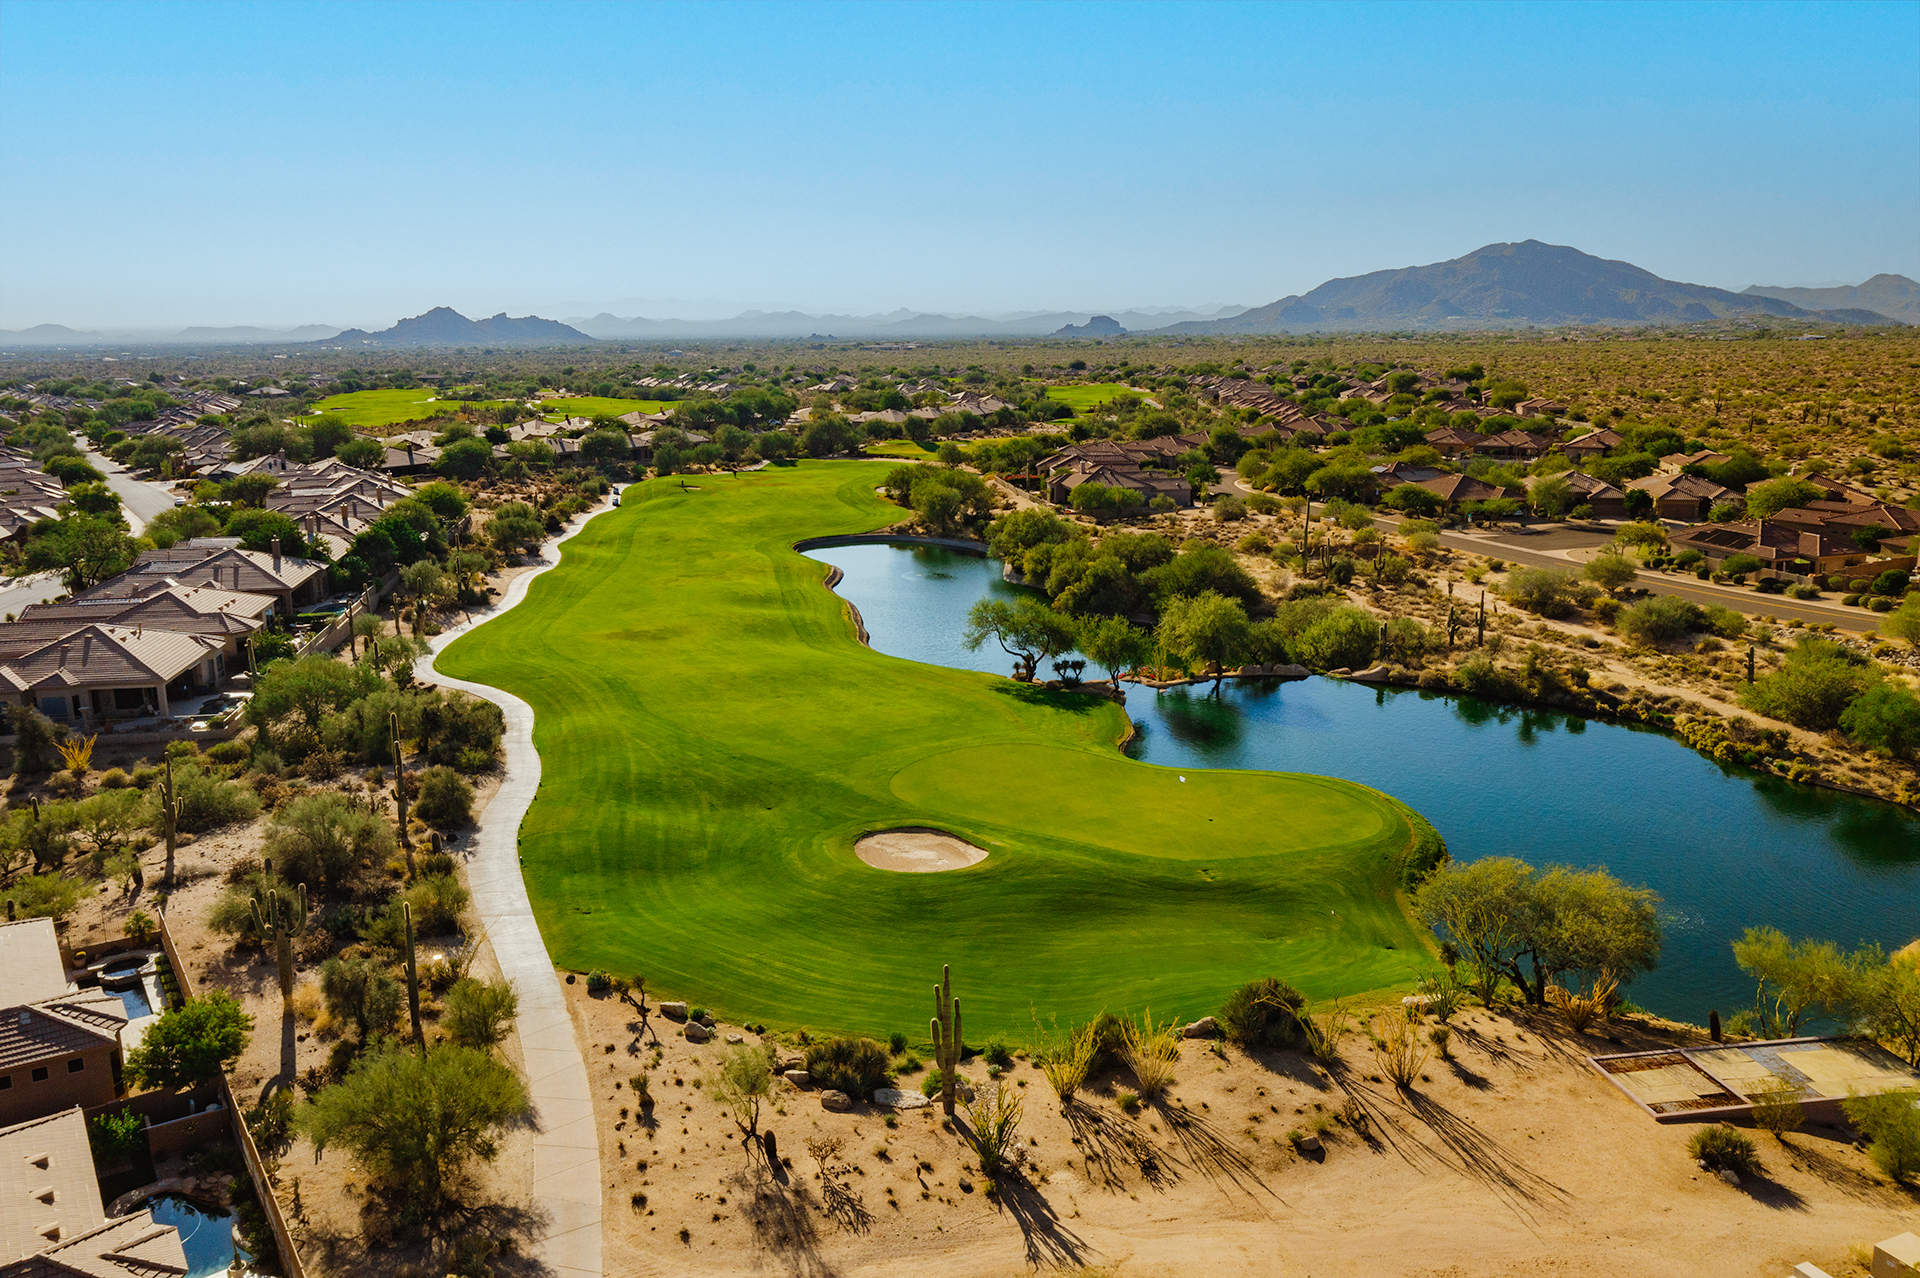 Golf Course in Scottsdale, AZ